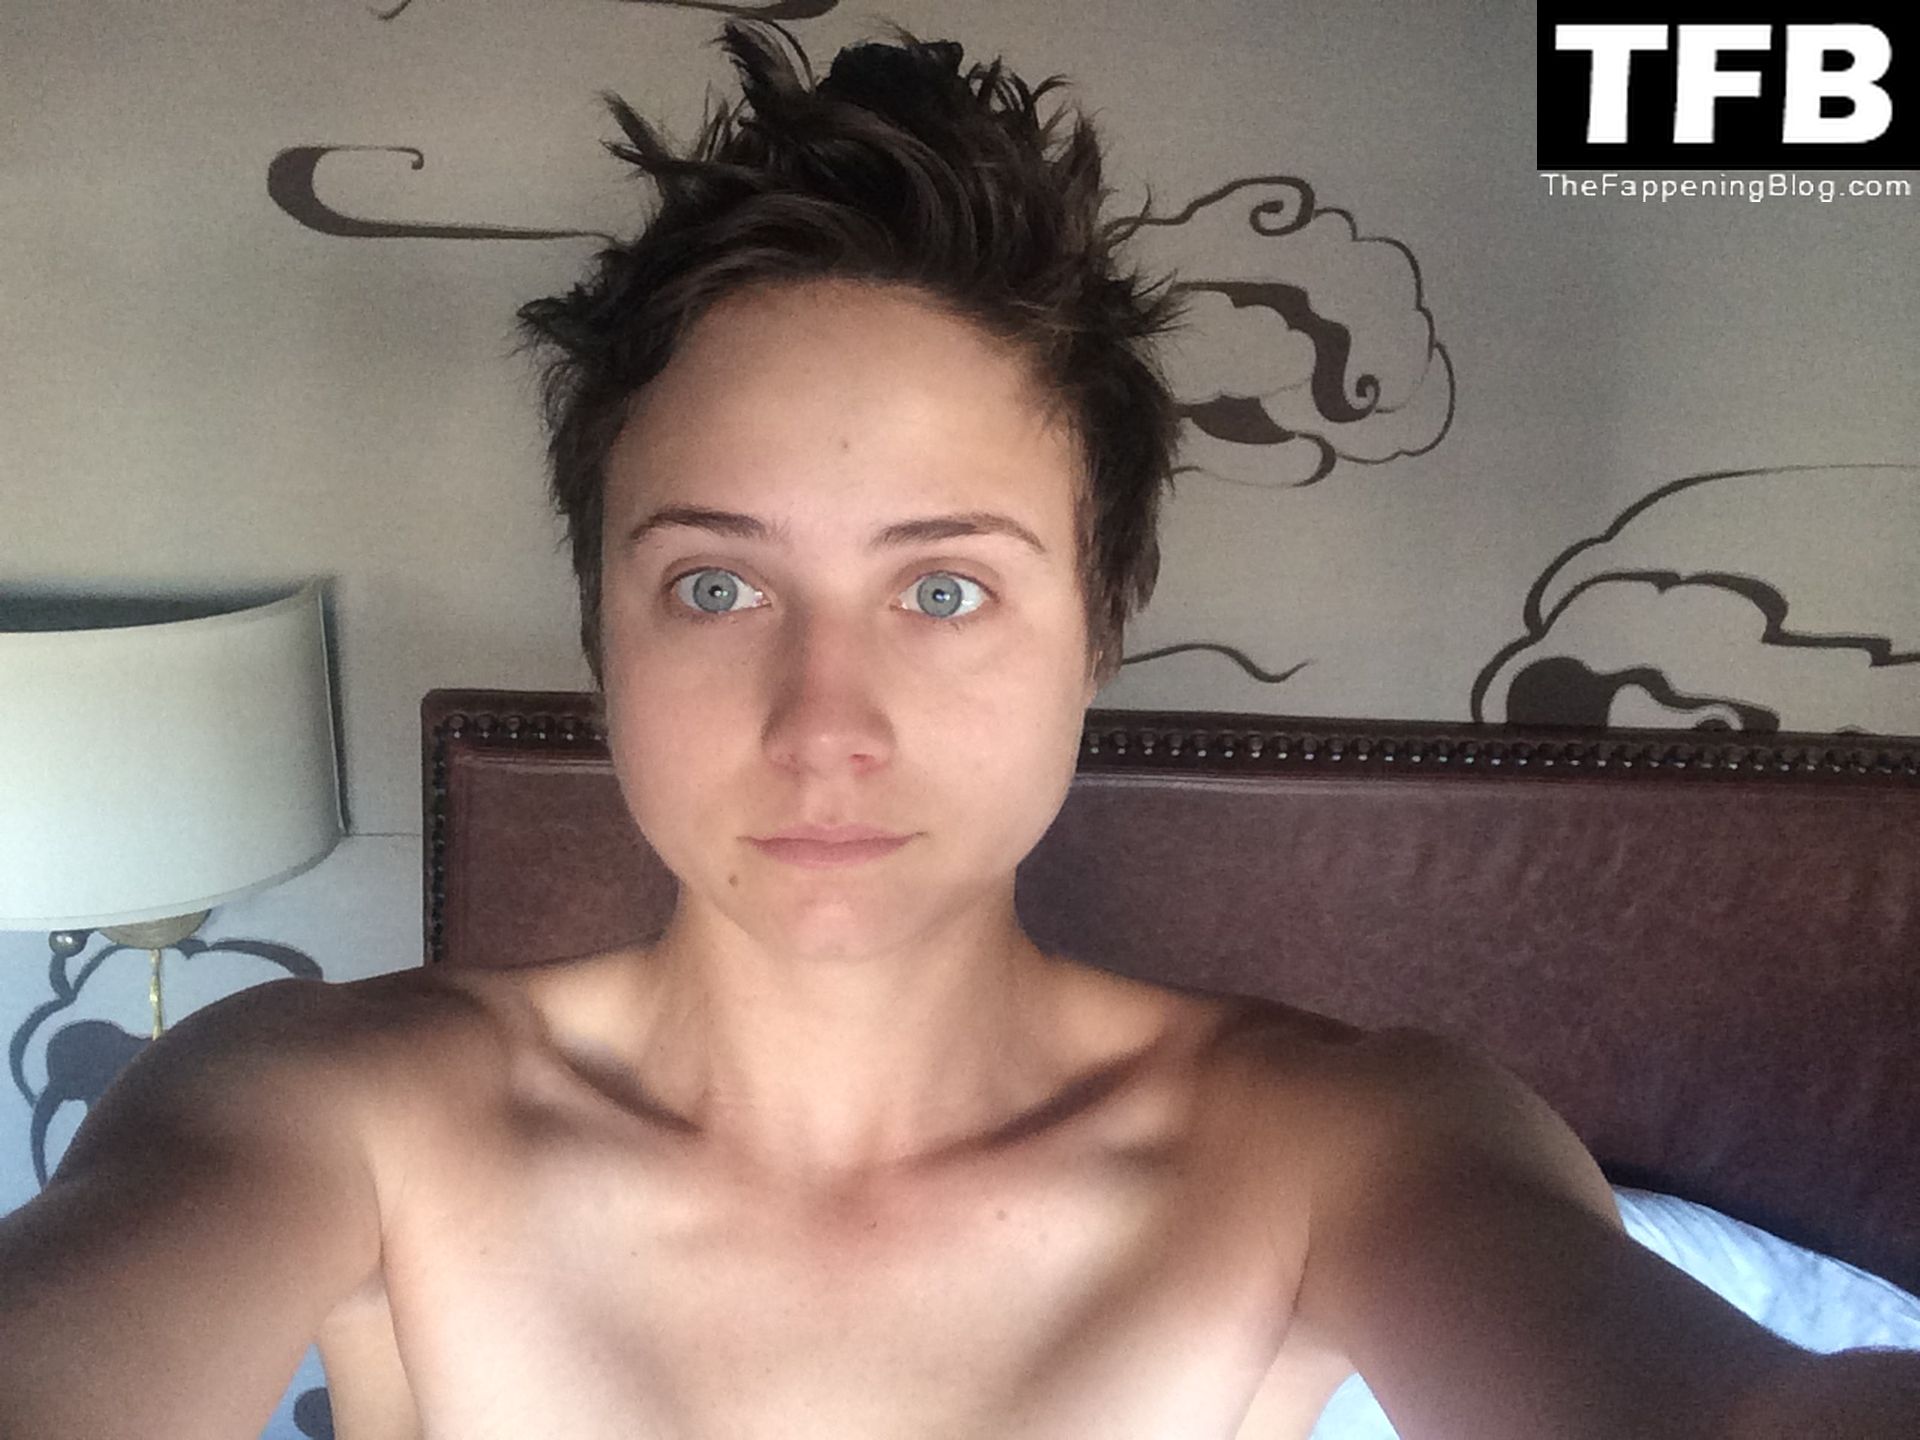 Tessa-James-Nude-Leaked-The-Fappening-Blog-7.jpg